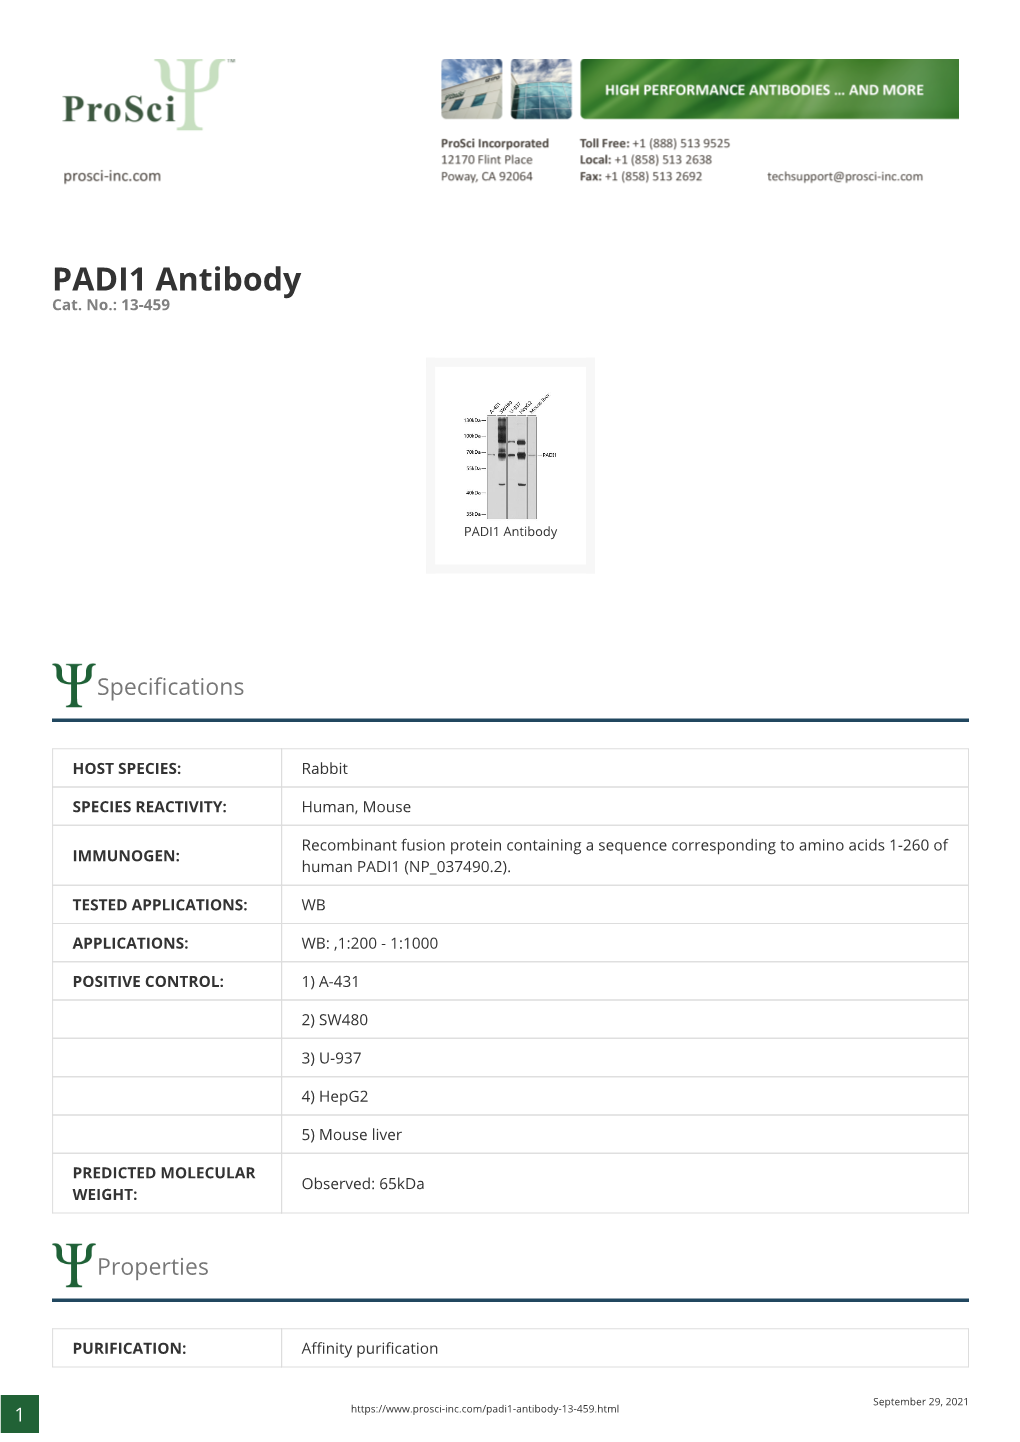 PADI1 Antibody Cat